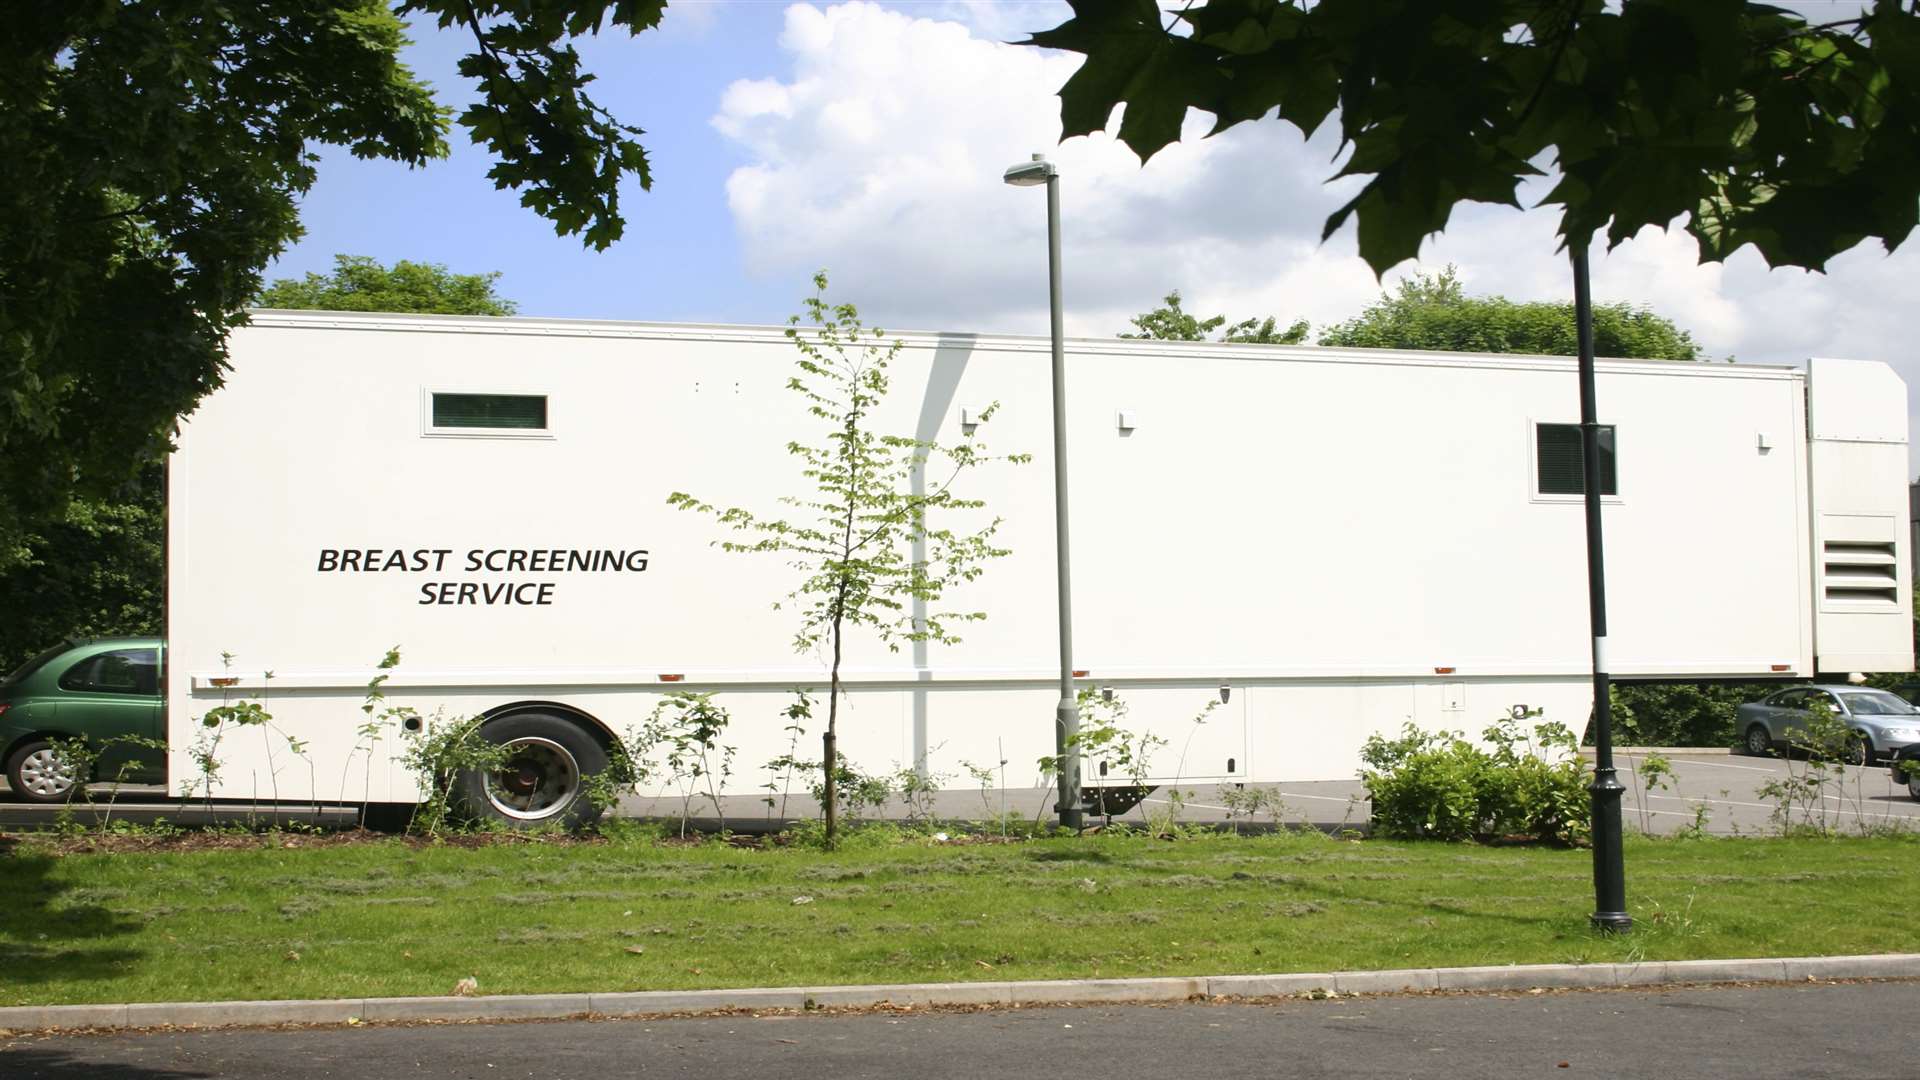 The screening van has broken down in the Angel Centre car park